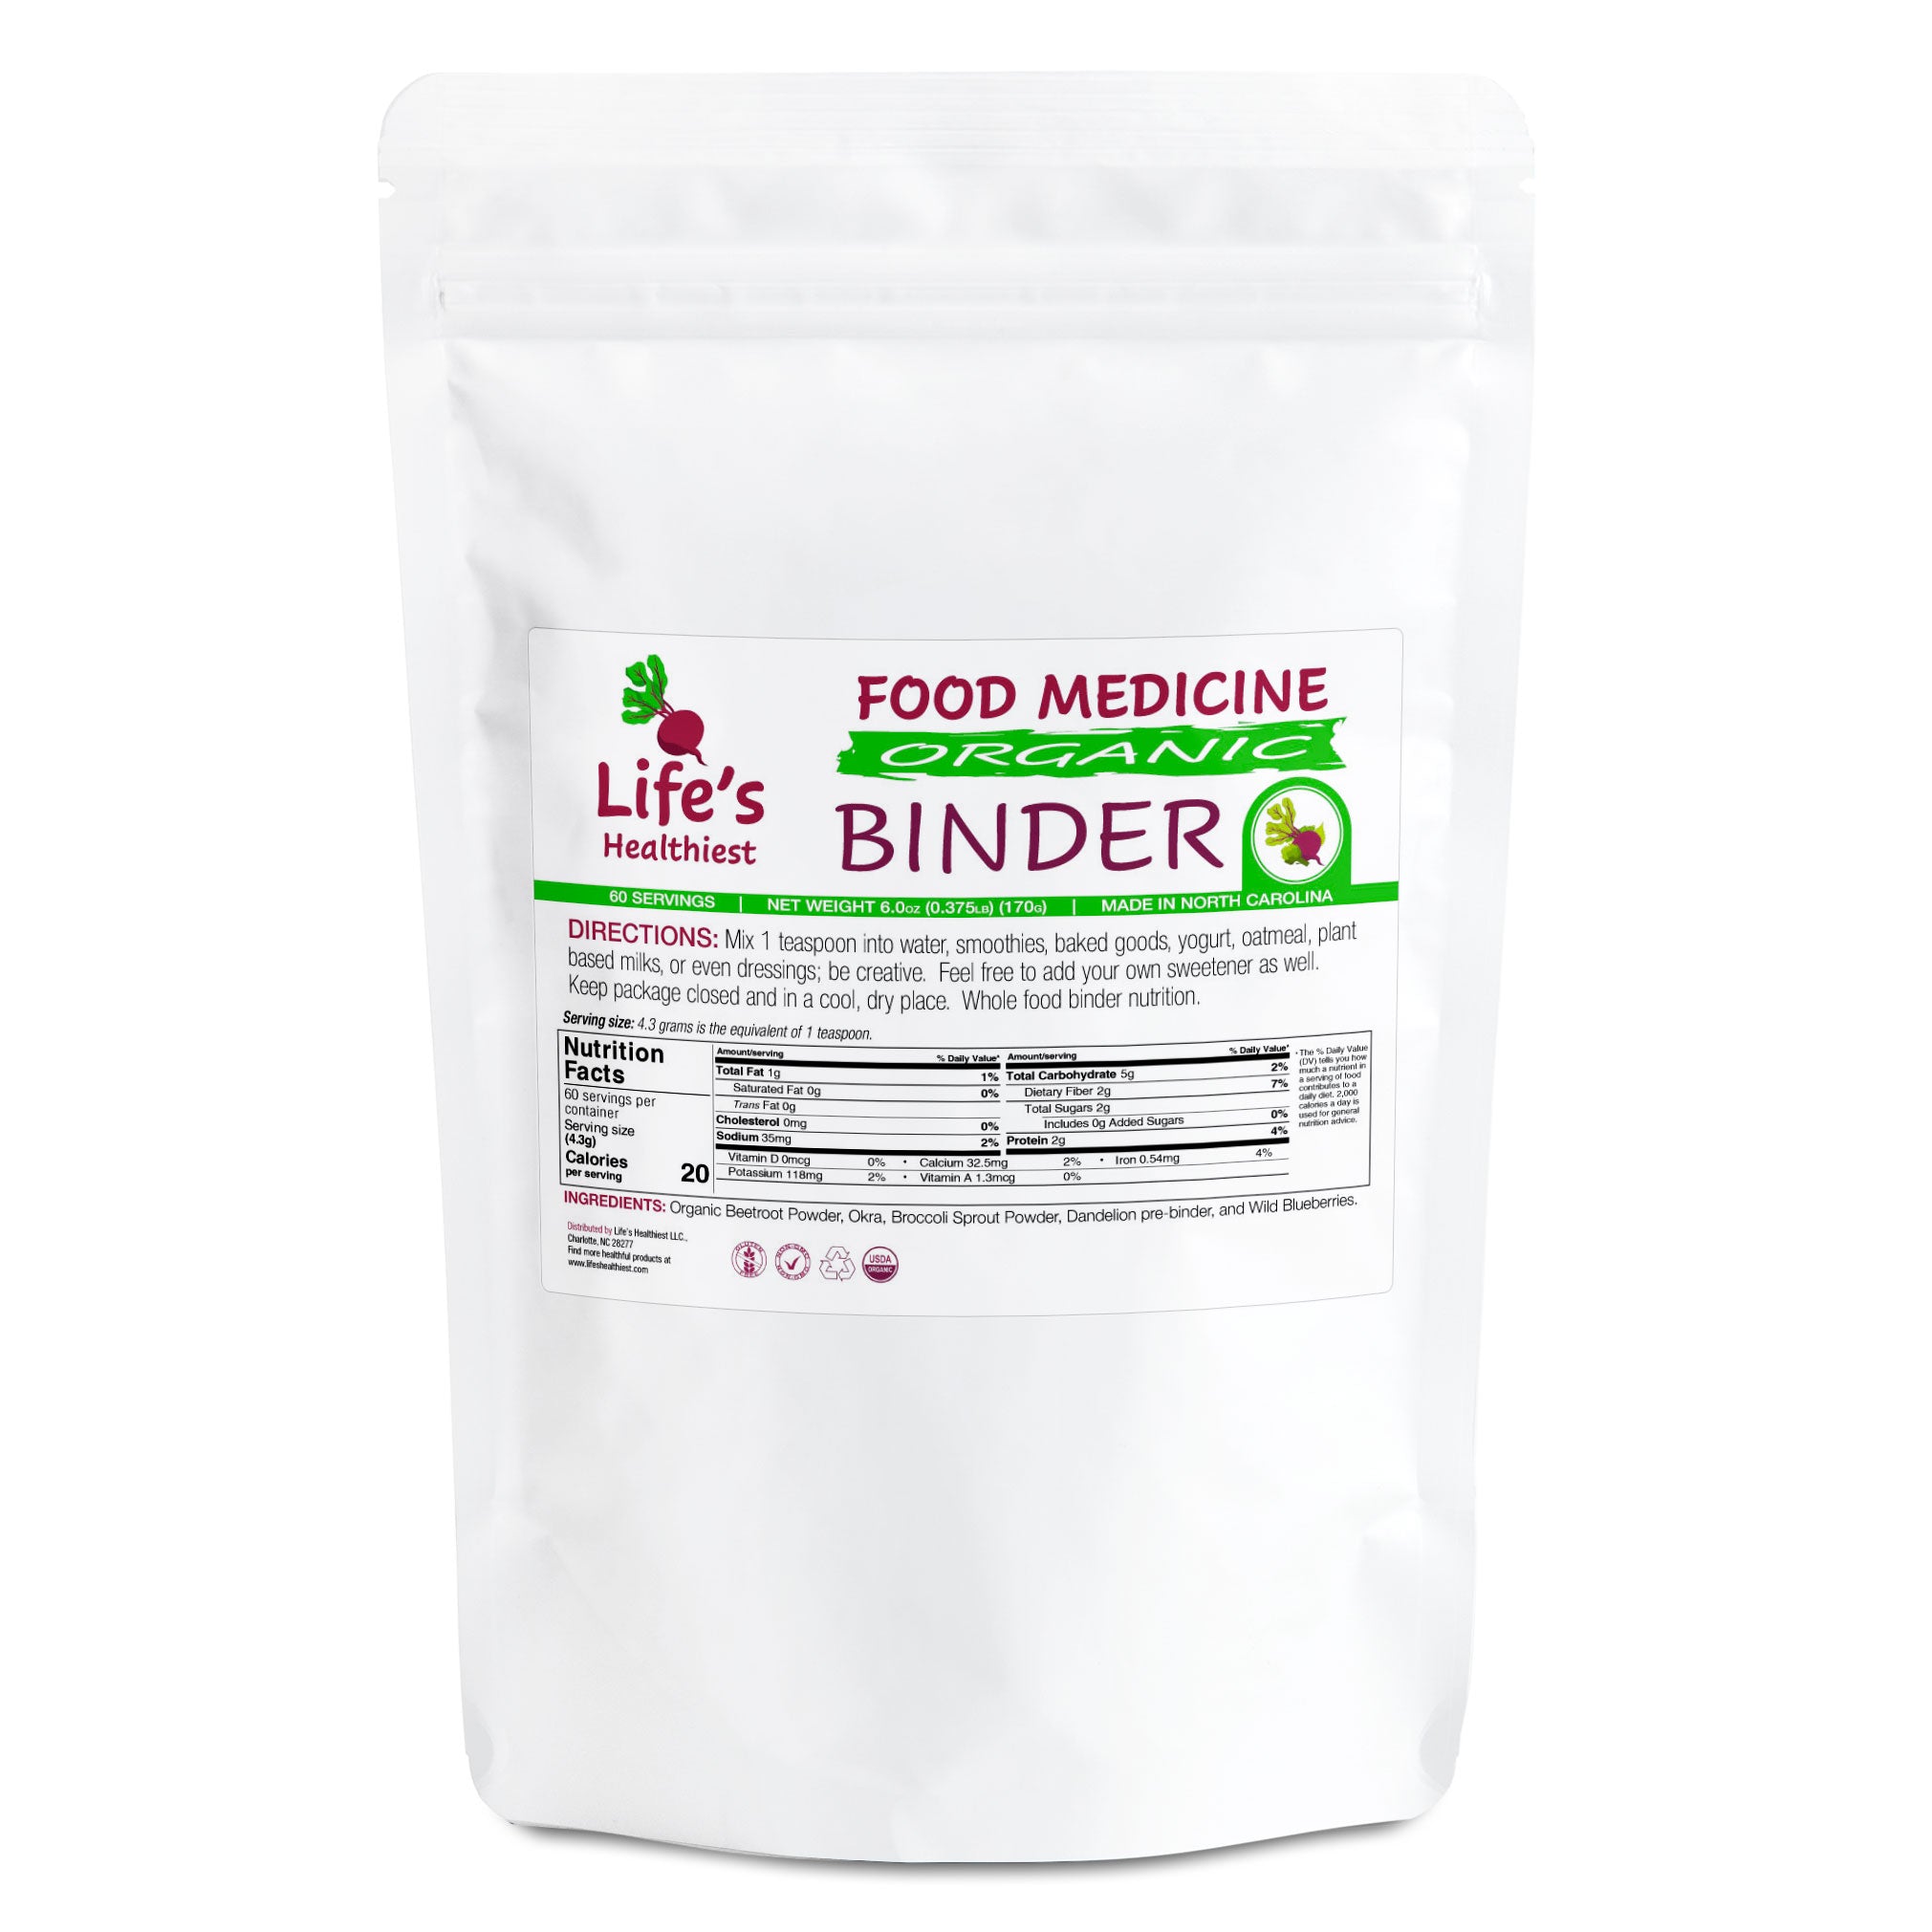 Life's Healthiest Binder Whole Food Powder Blend 6.0 oz